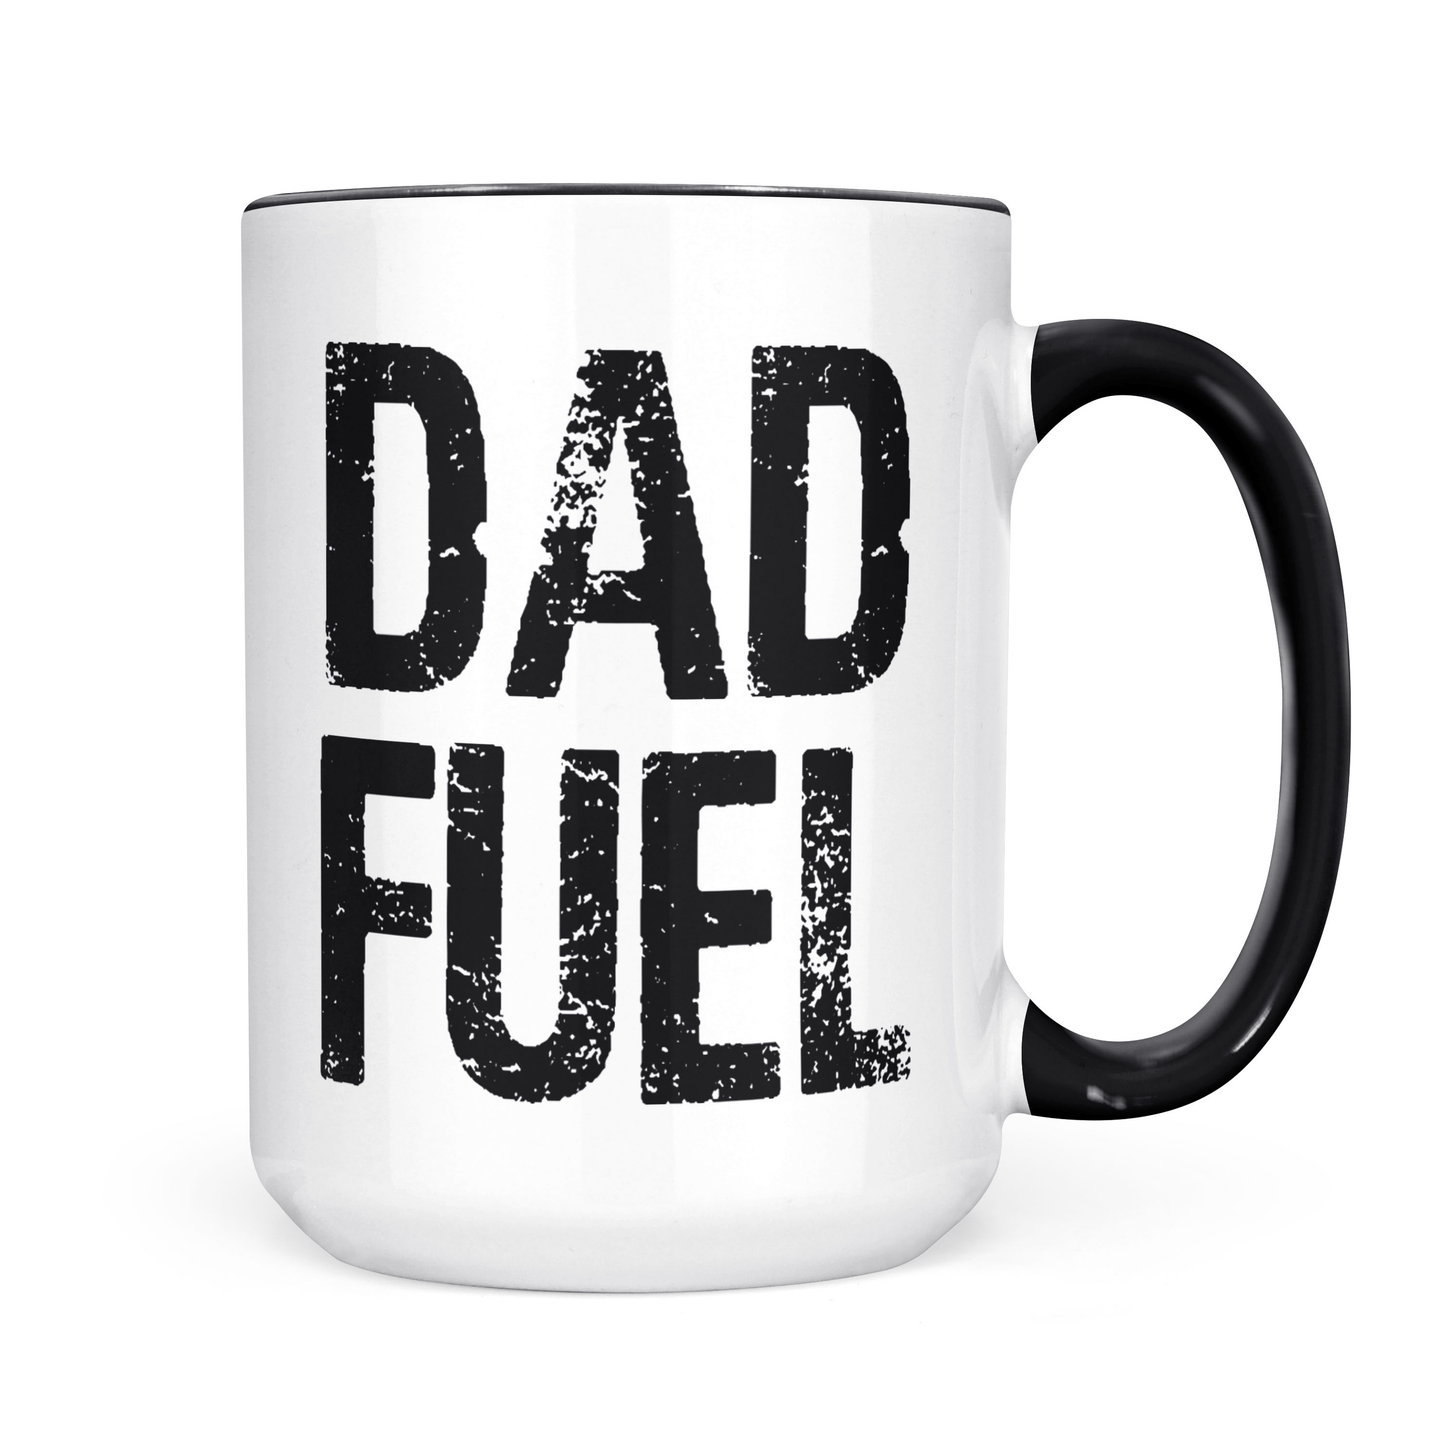 Dad Fuel Coffee Mug